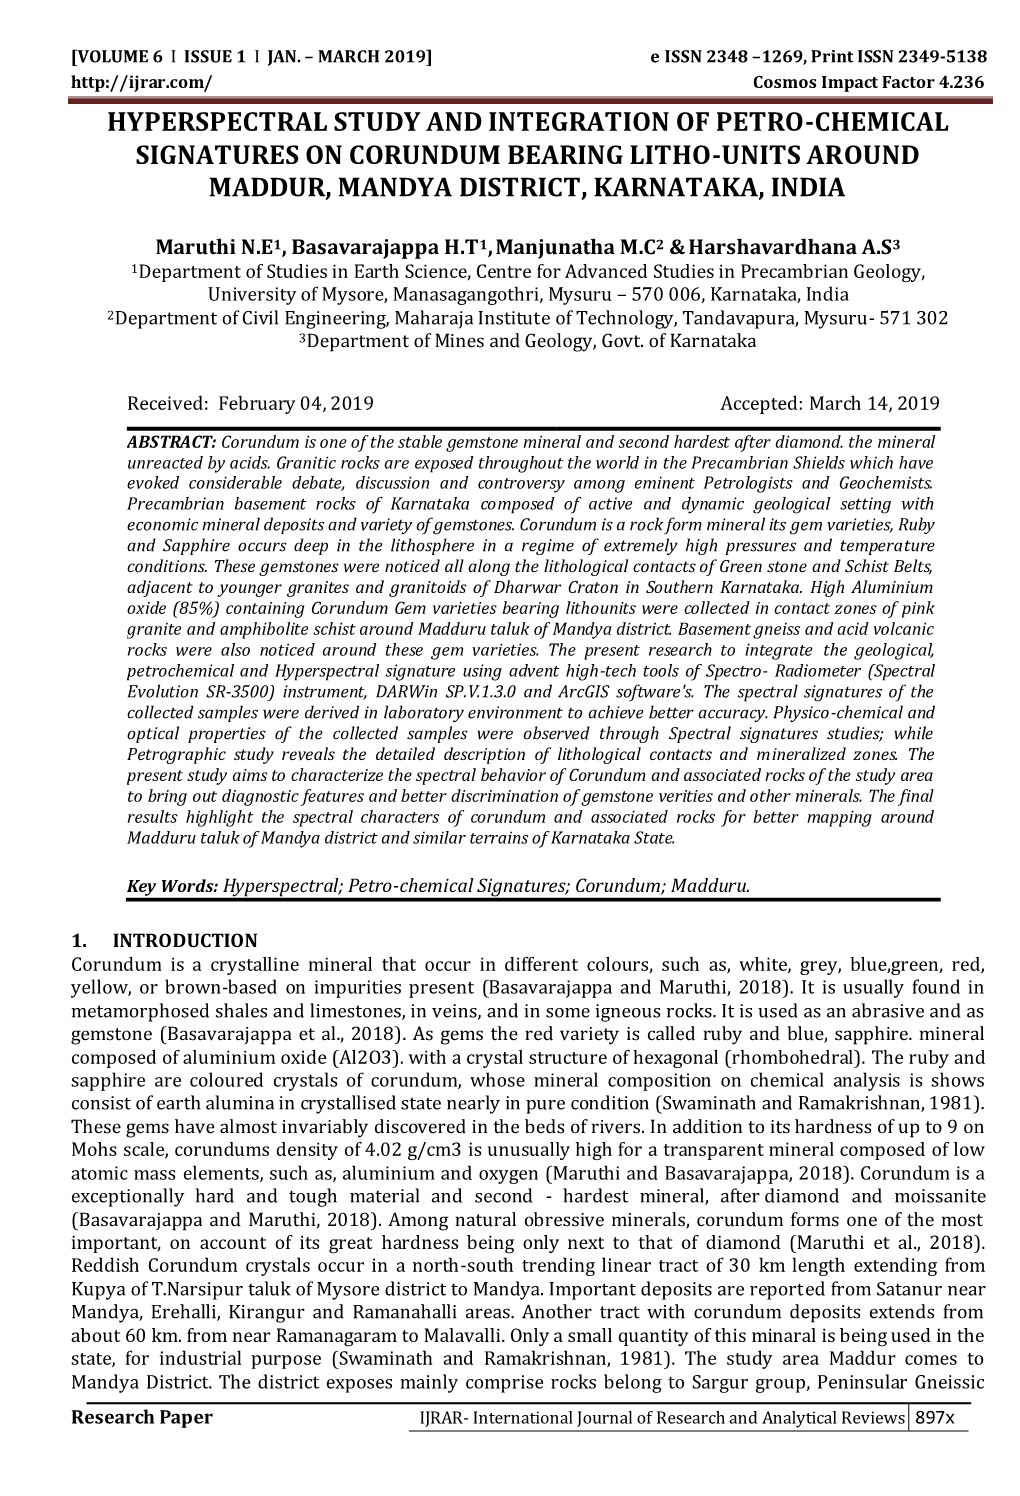 Hyperspectral Study and Integration of Petro-Chemical Signatures on Corundum Bearing Litho-Units Around Maddur, Mandya District, Karnataka, India